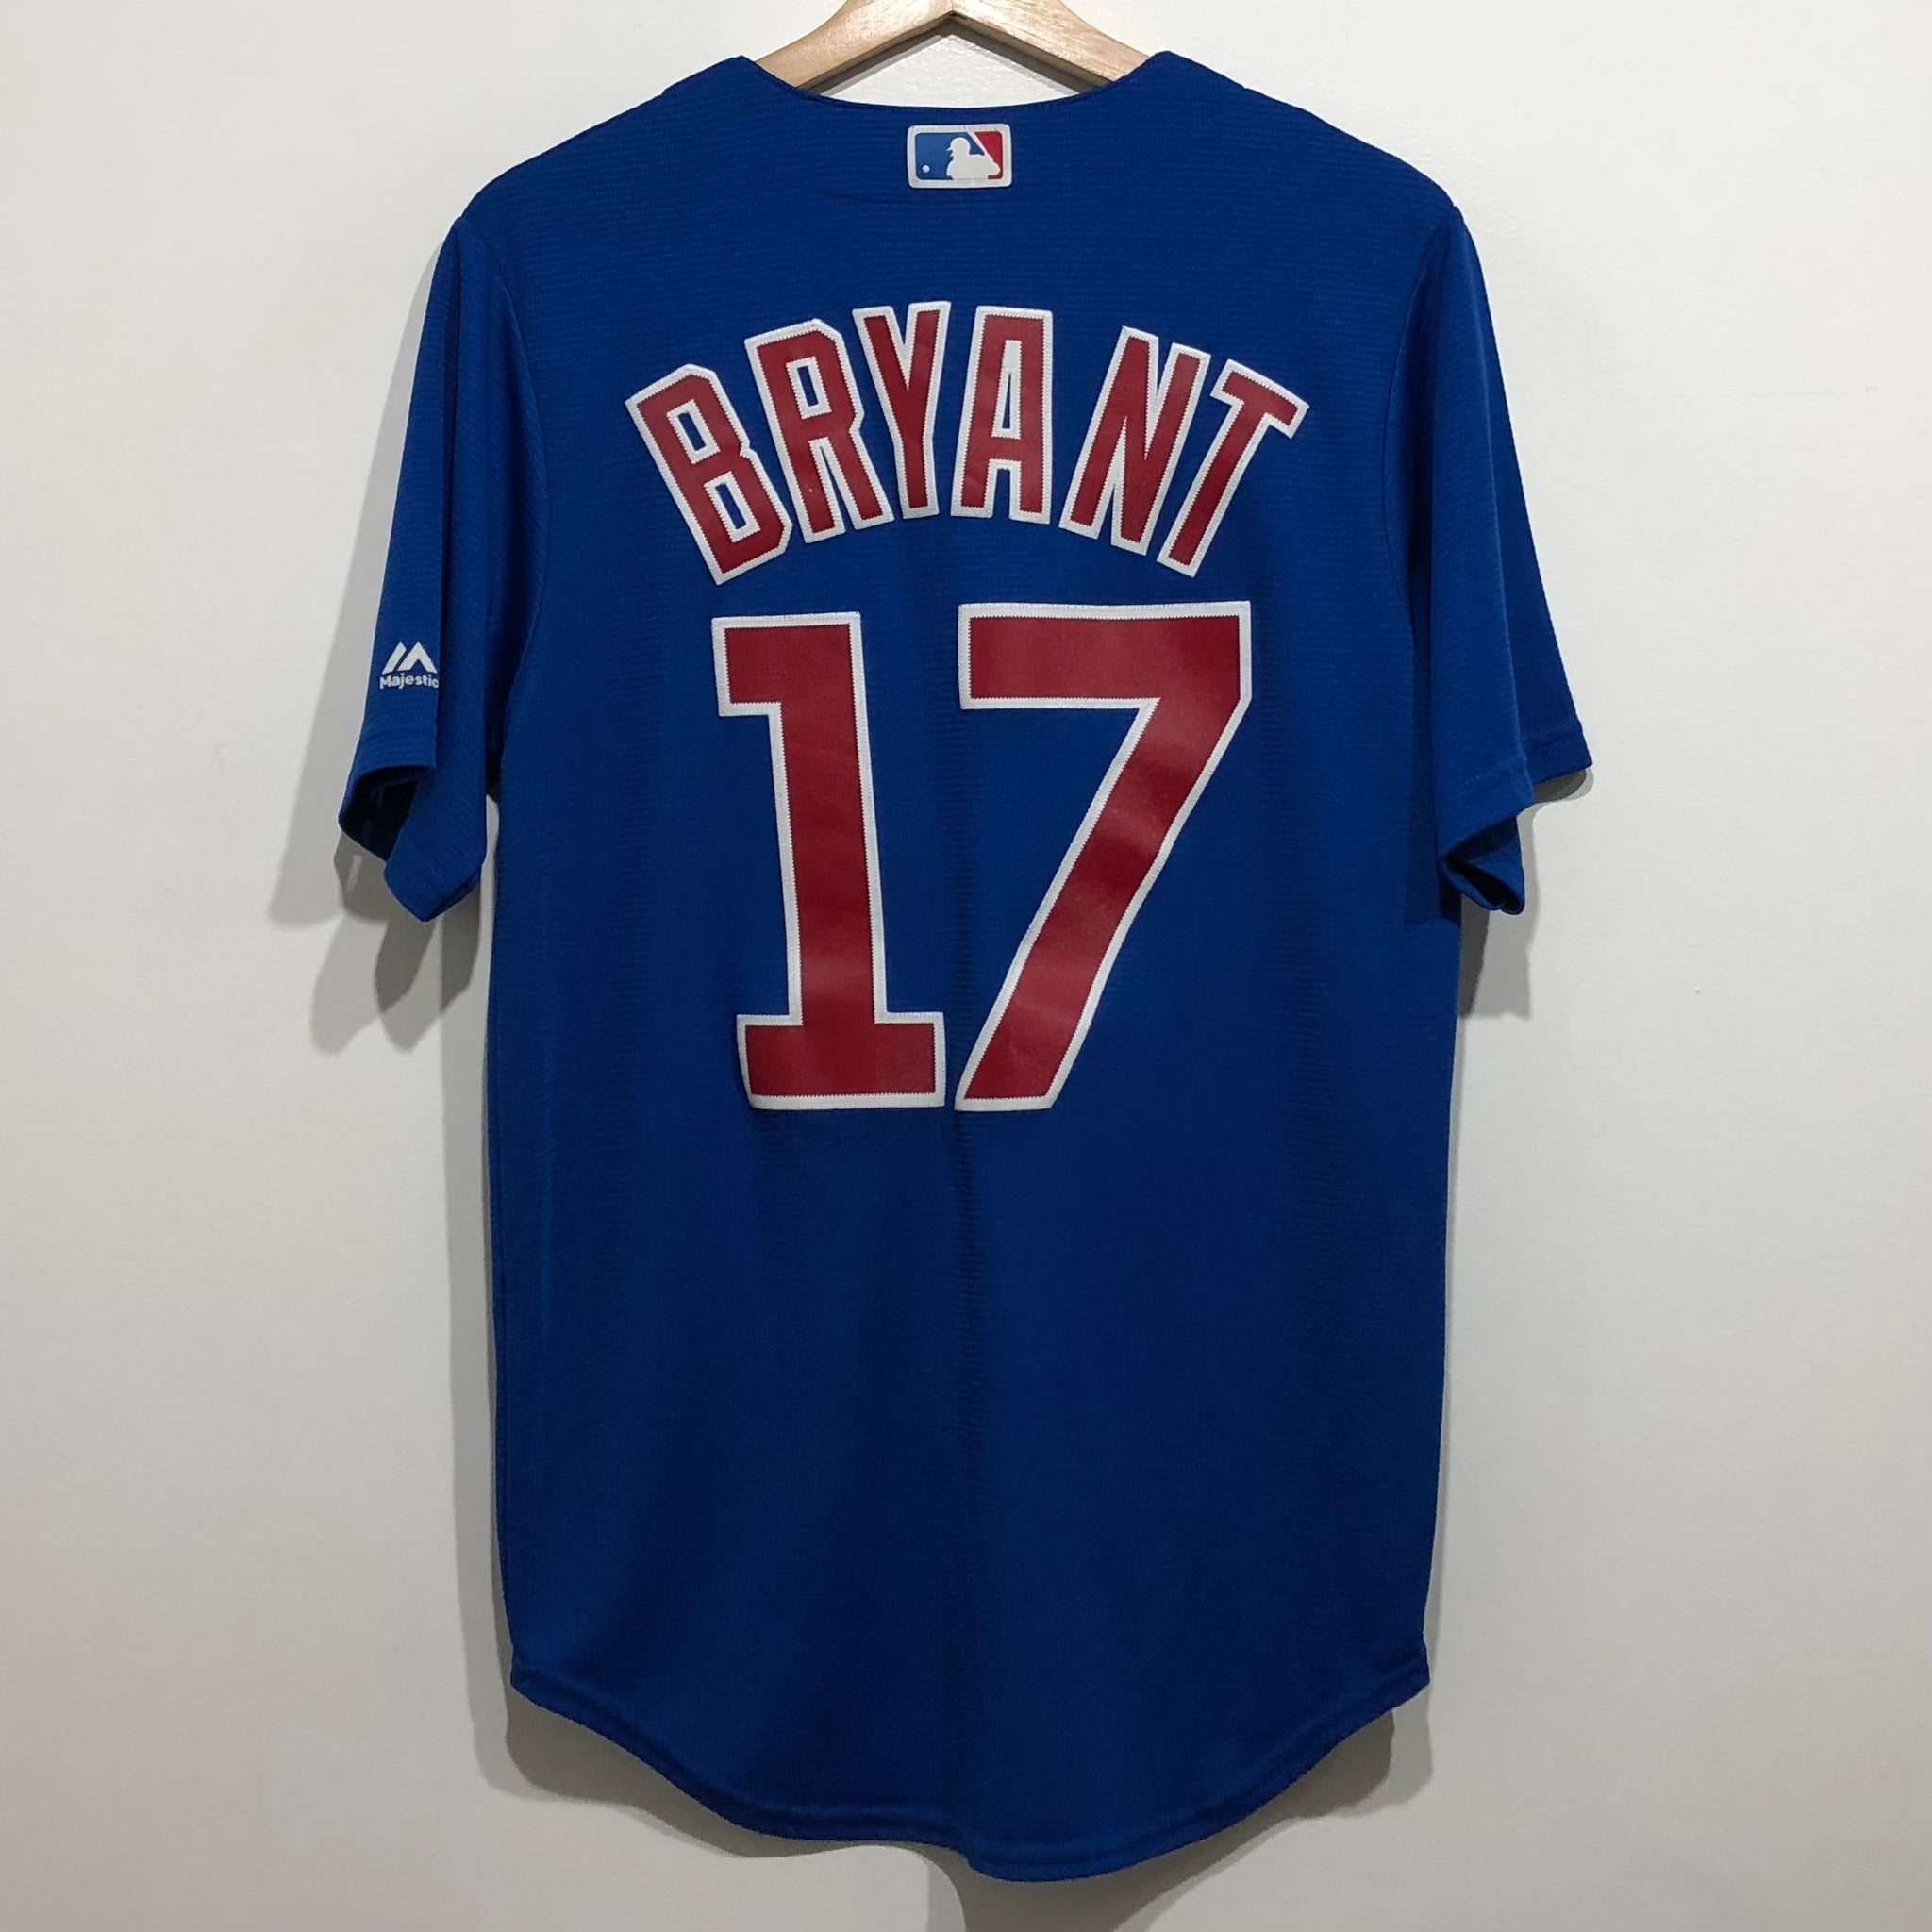 Kris Bryant MLB Jerseys for sale